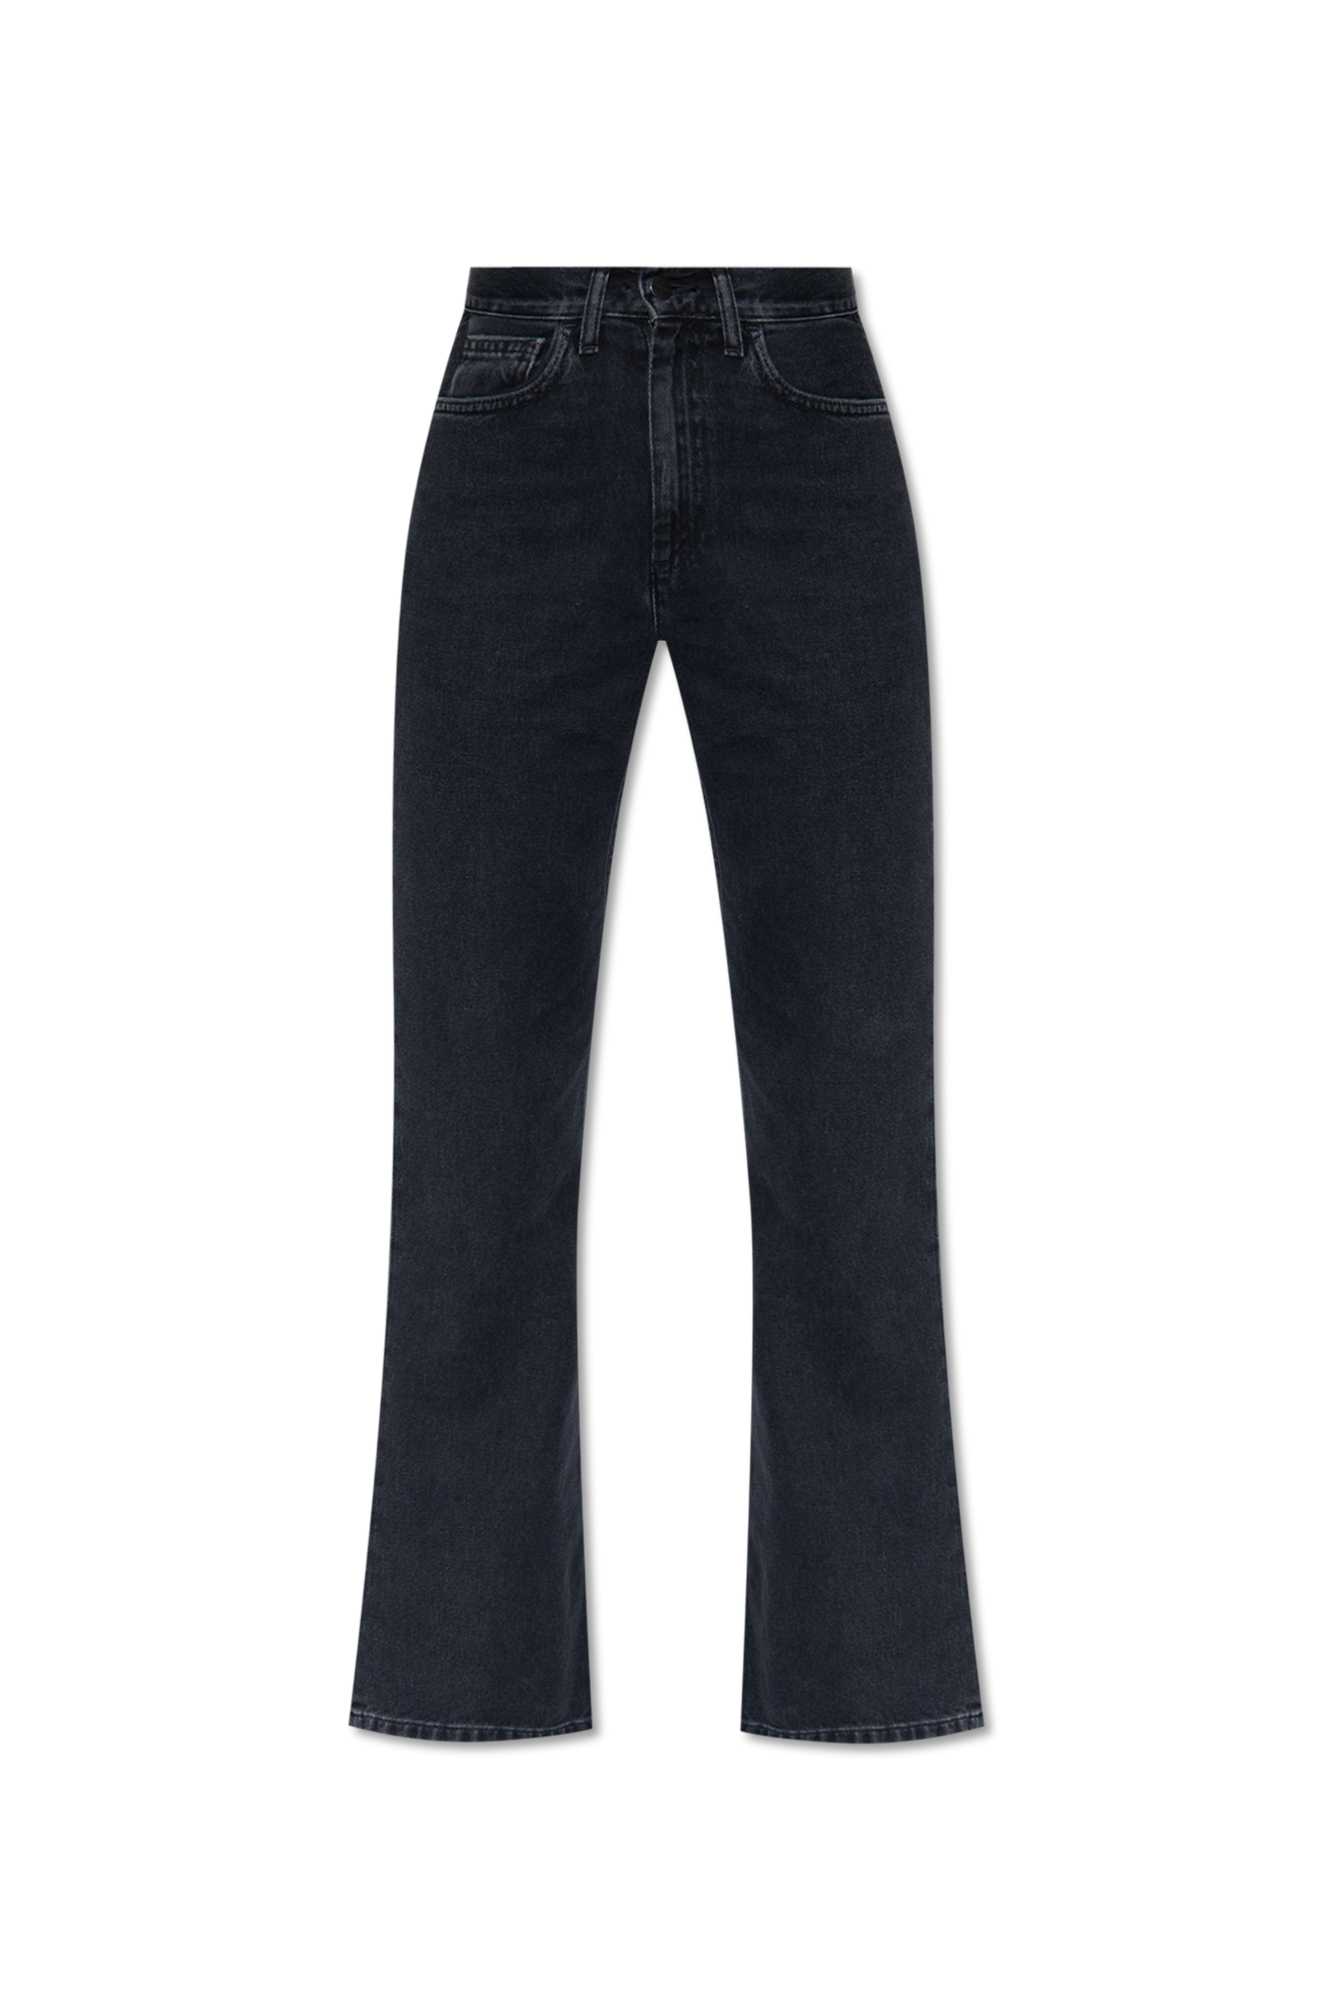 Carhartt WIP ‘Varney’ jeans